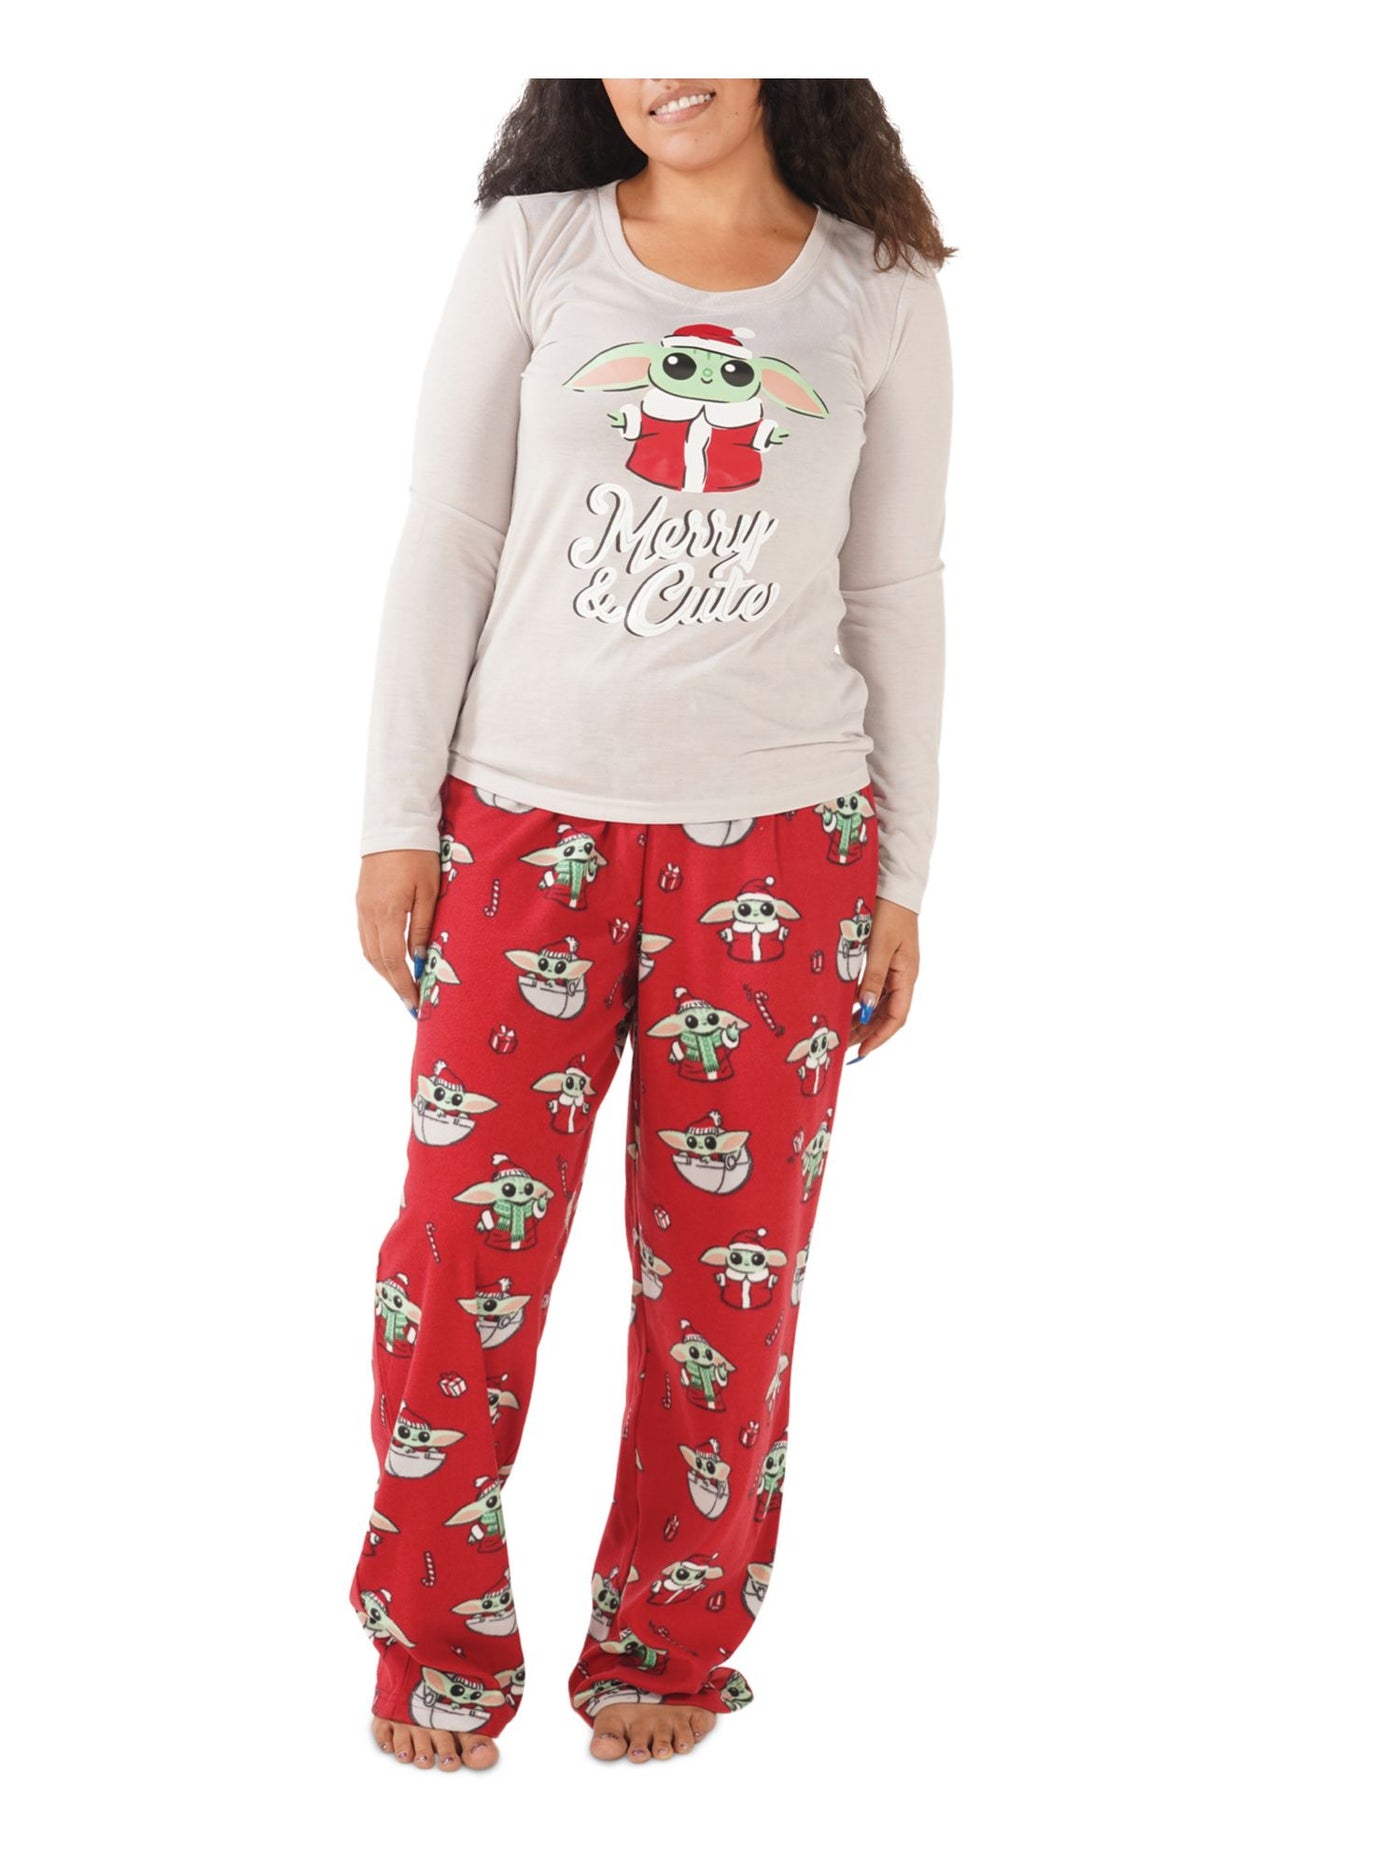 HYBRID APPAREL Womens Red Graphic Top Elastic Band Long Sleeve Straight leg Pants Pajamas Plus 1X